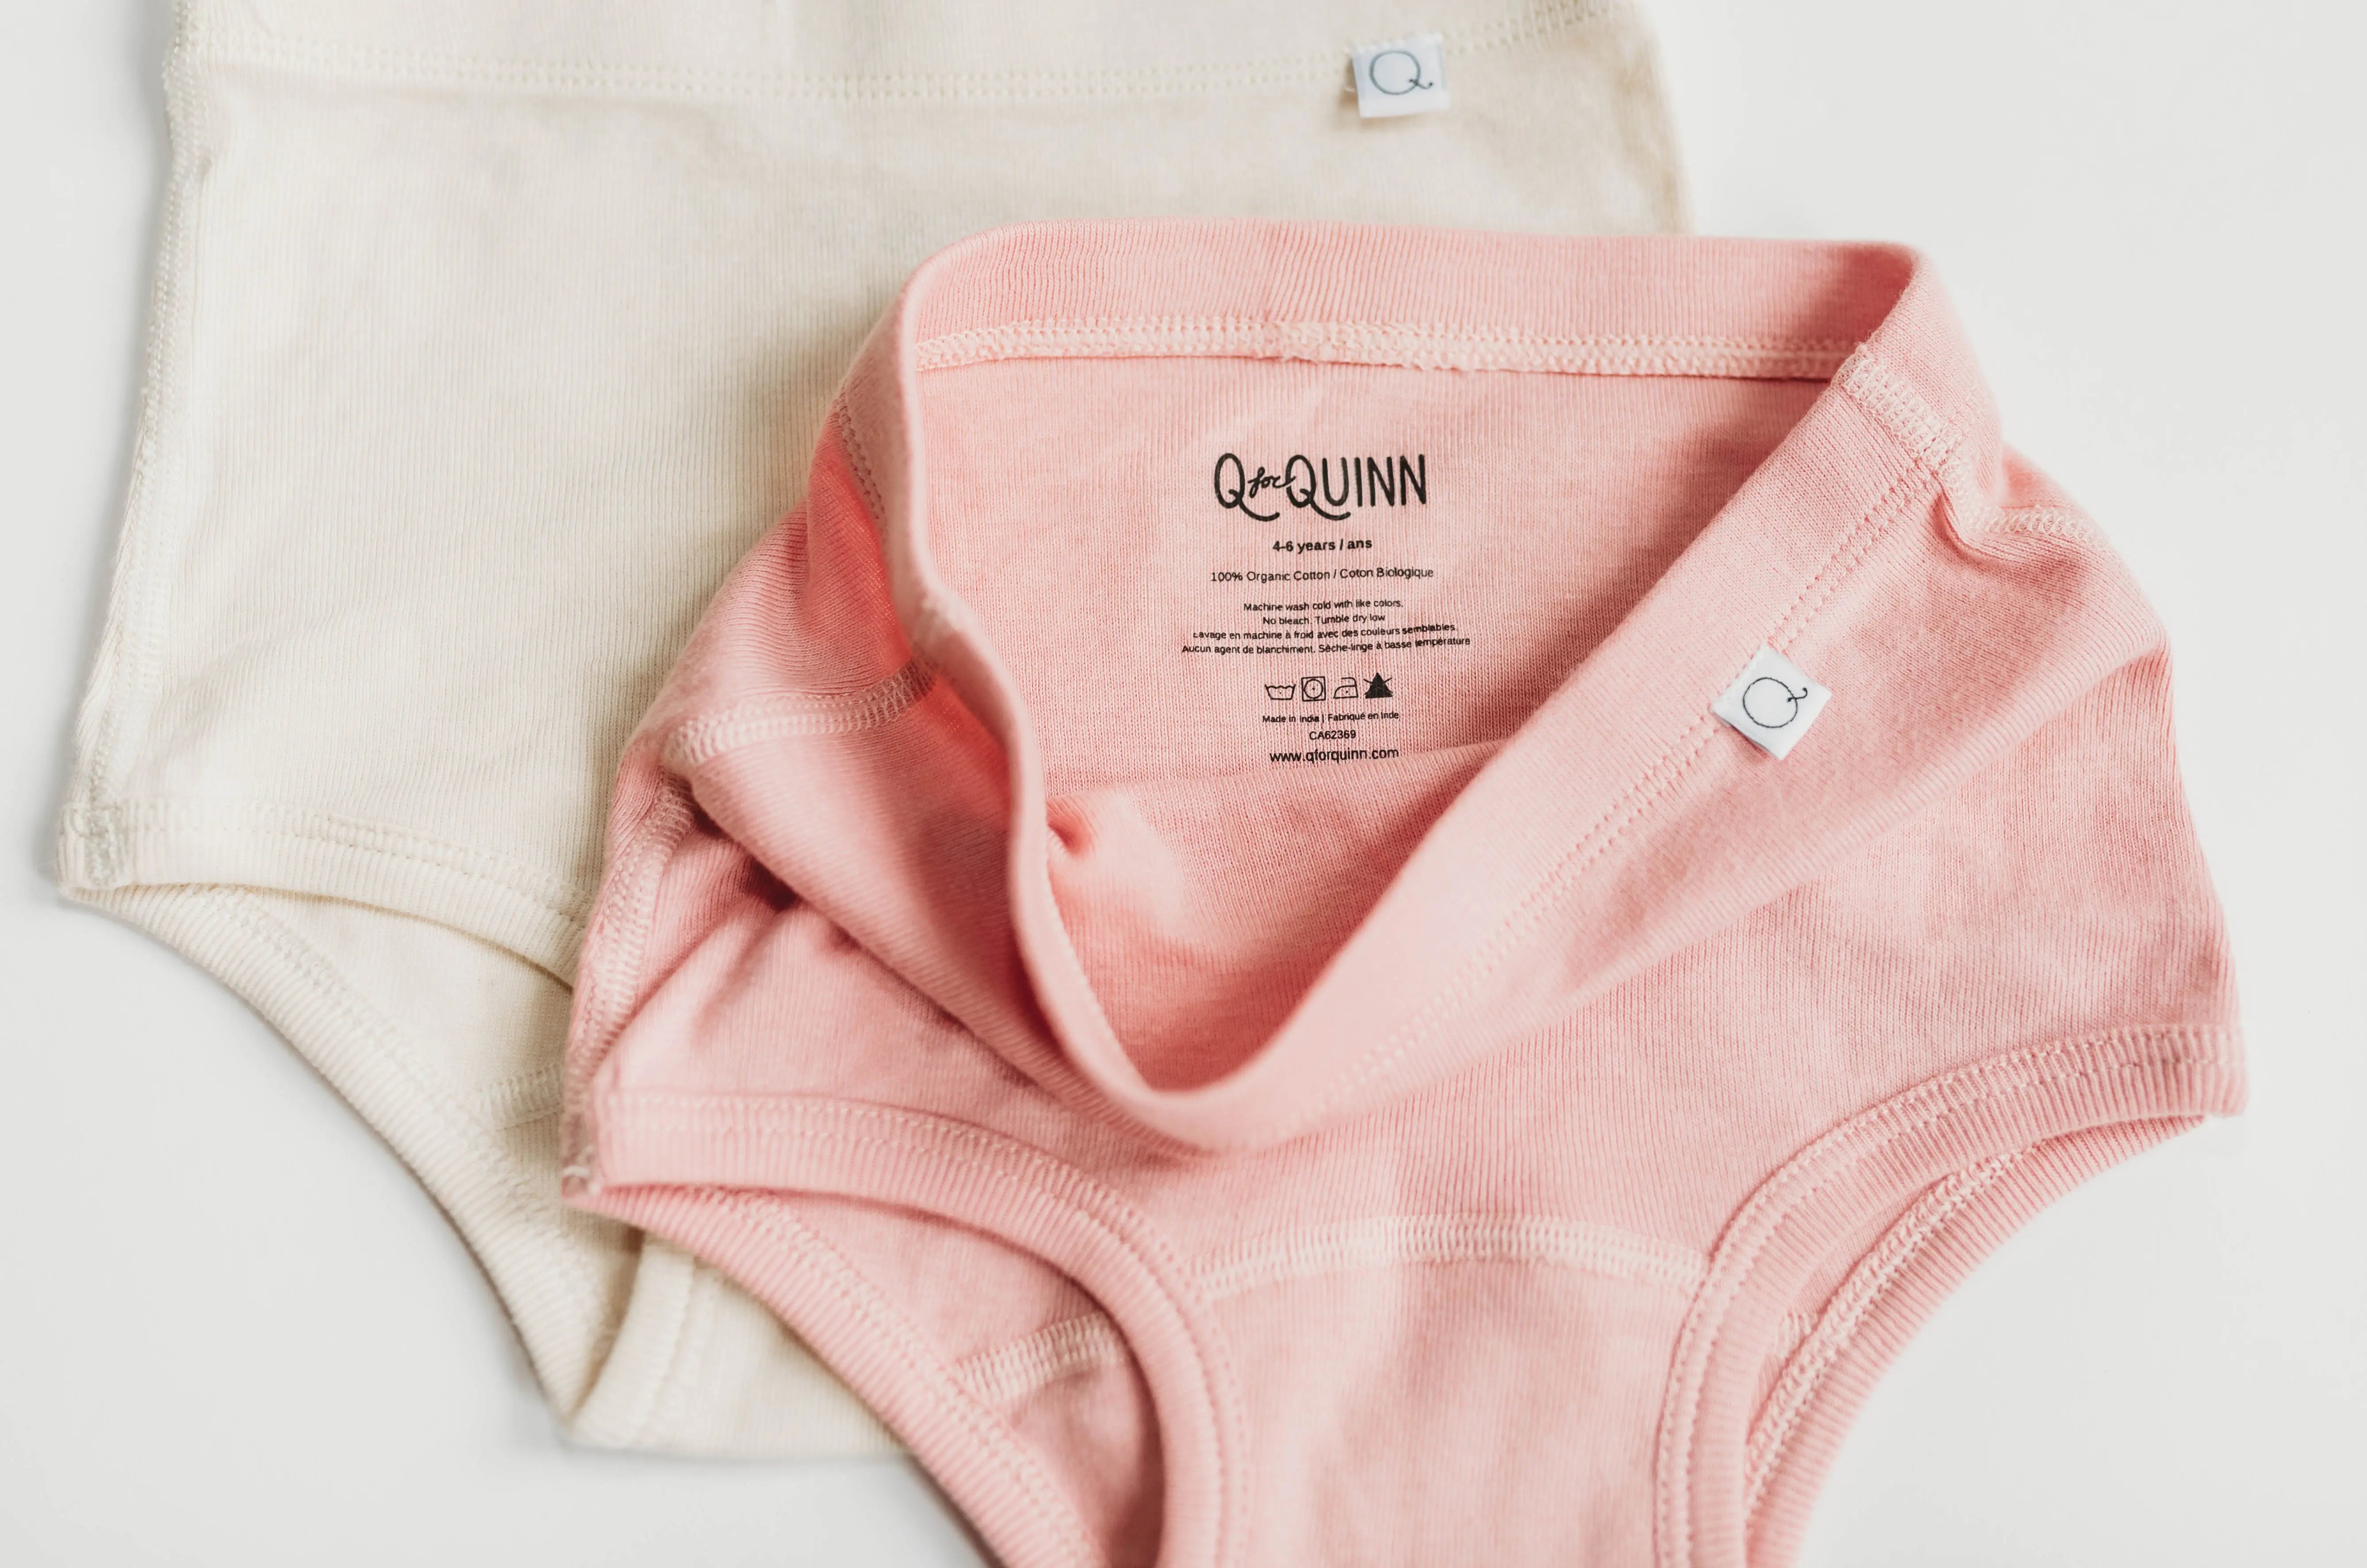 Women's Fluid-Resistant 100% Cotton Underwear With 6 Ply